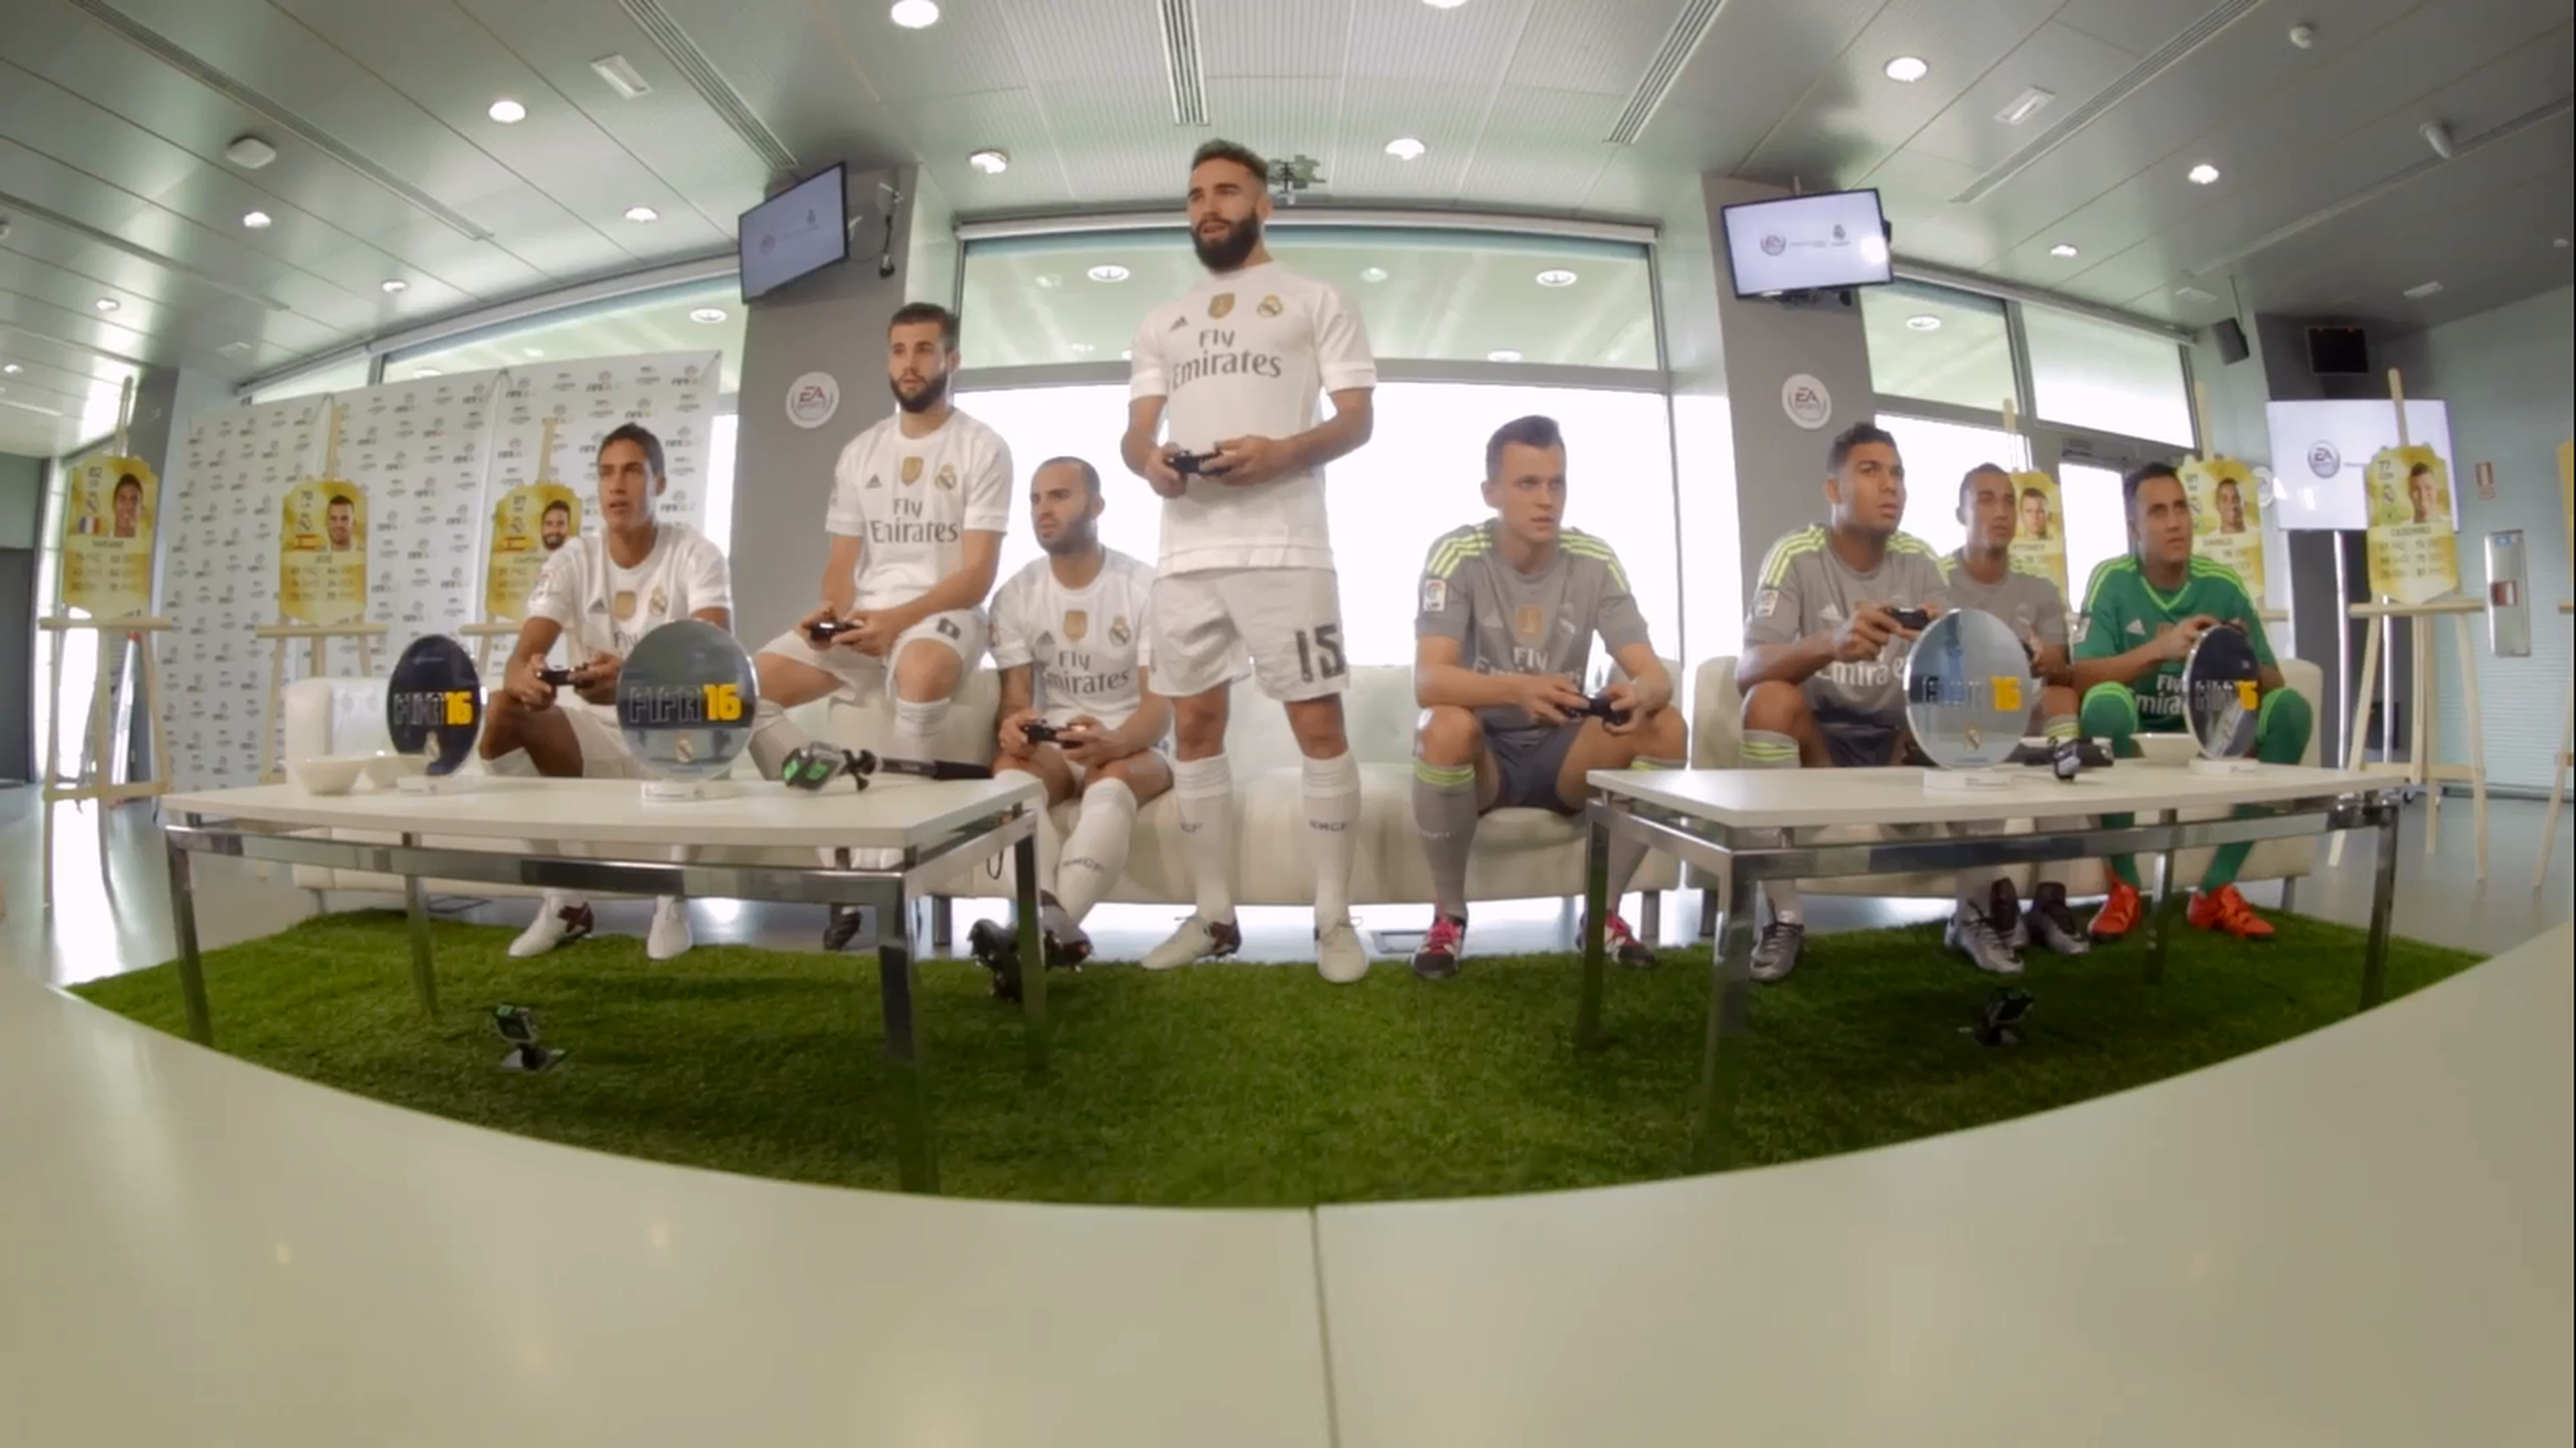 FIFA 16 - Real Madrid CF Player Tournament - Varane, Jese, Carvajal, Cheryshev, Danilo, Casemiro